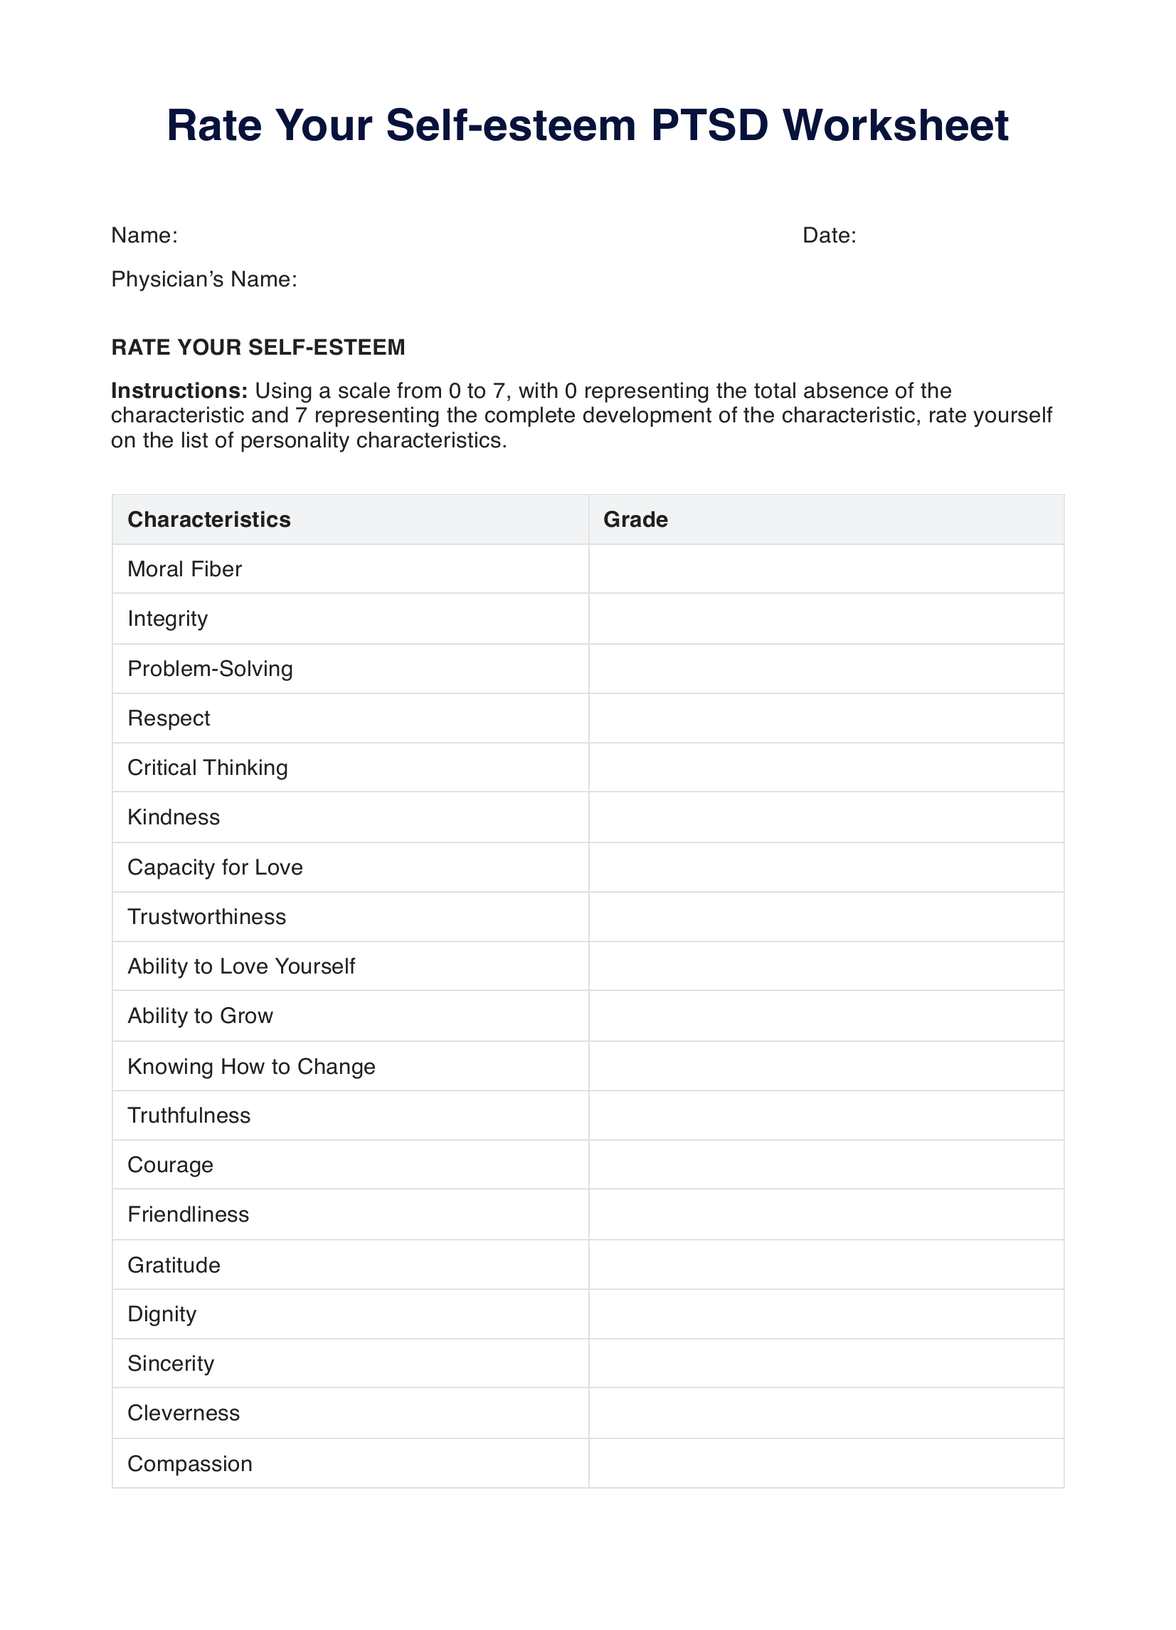 Rate Your Self-esteem PTSD Worksheet PDF Example